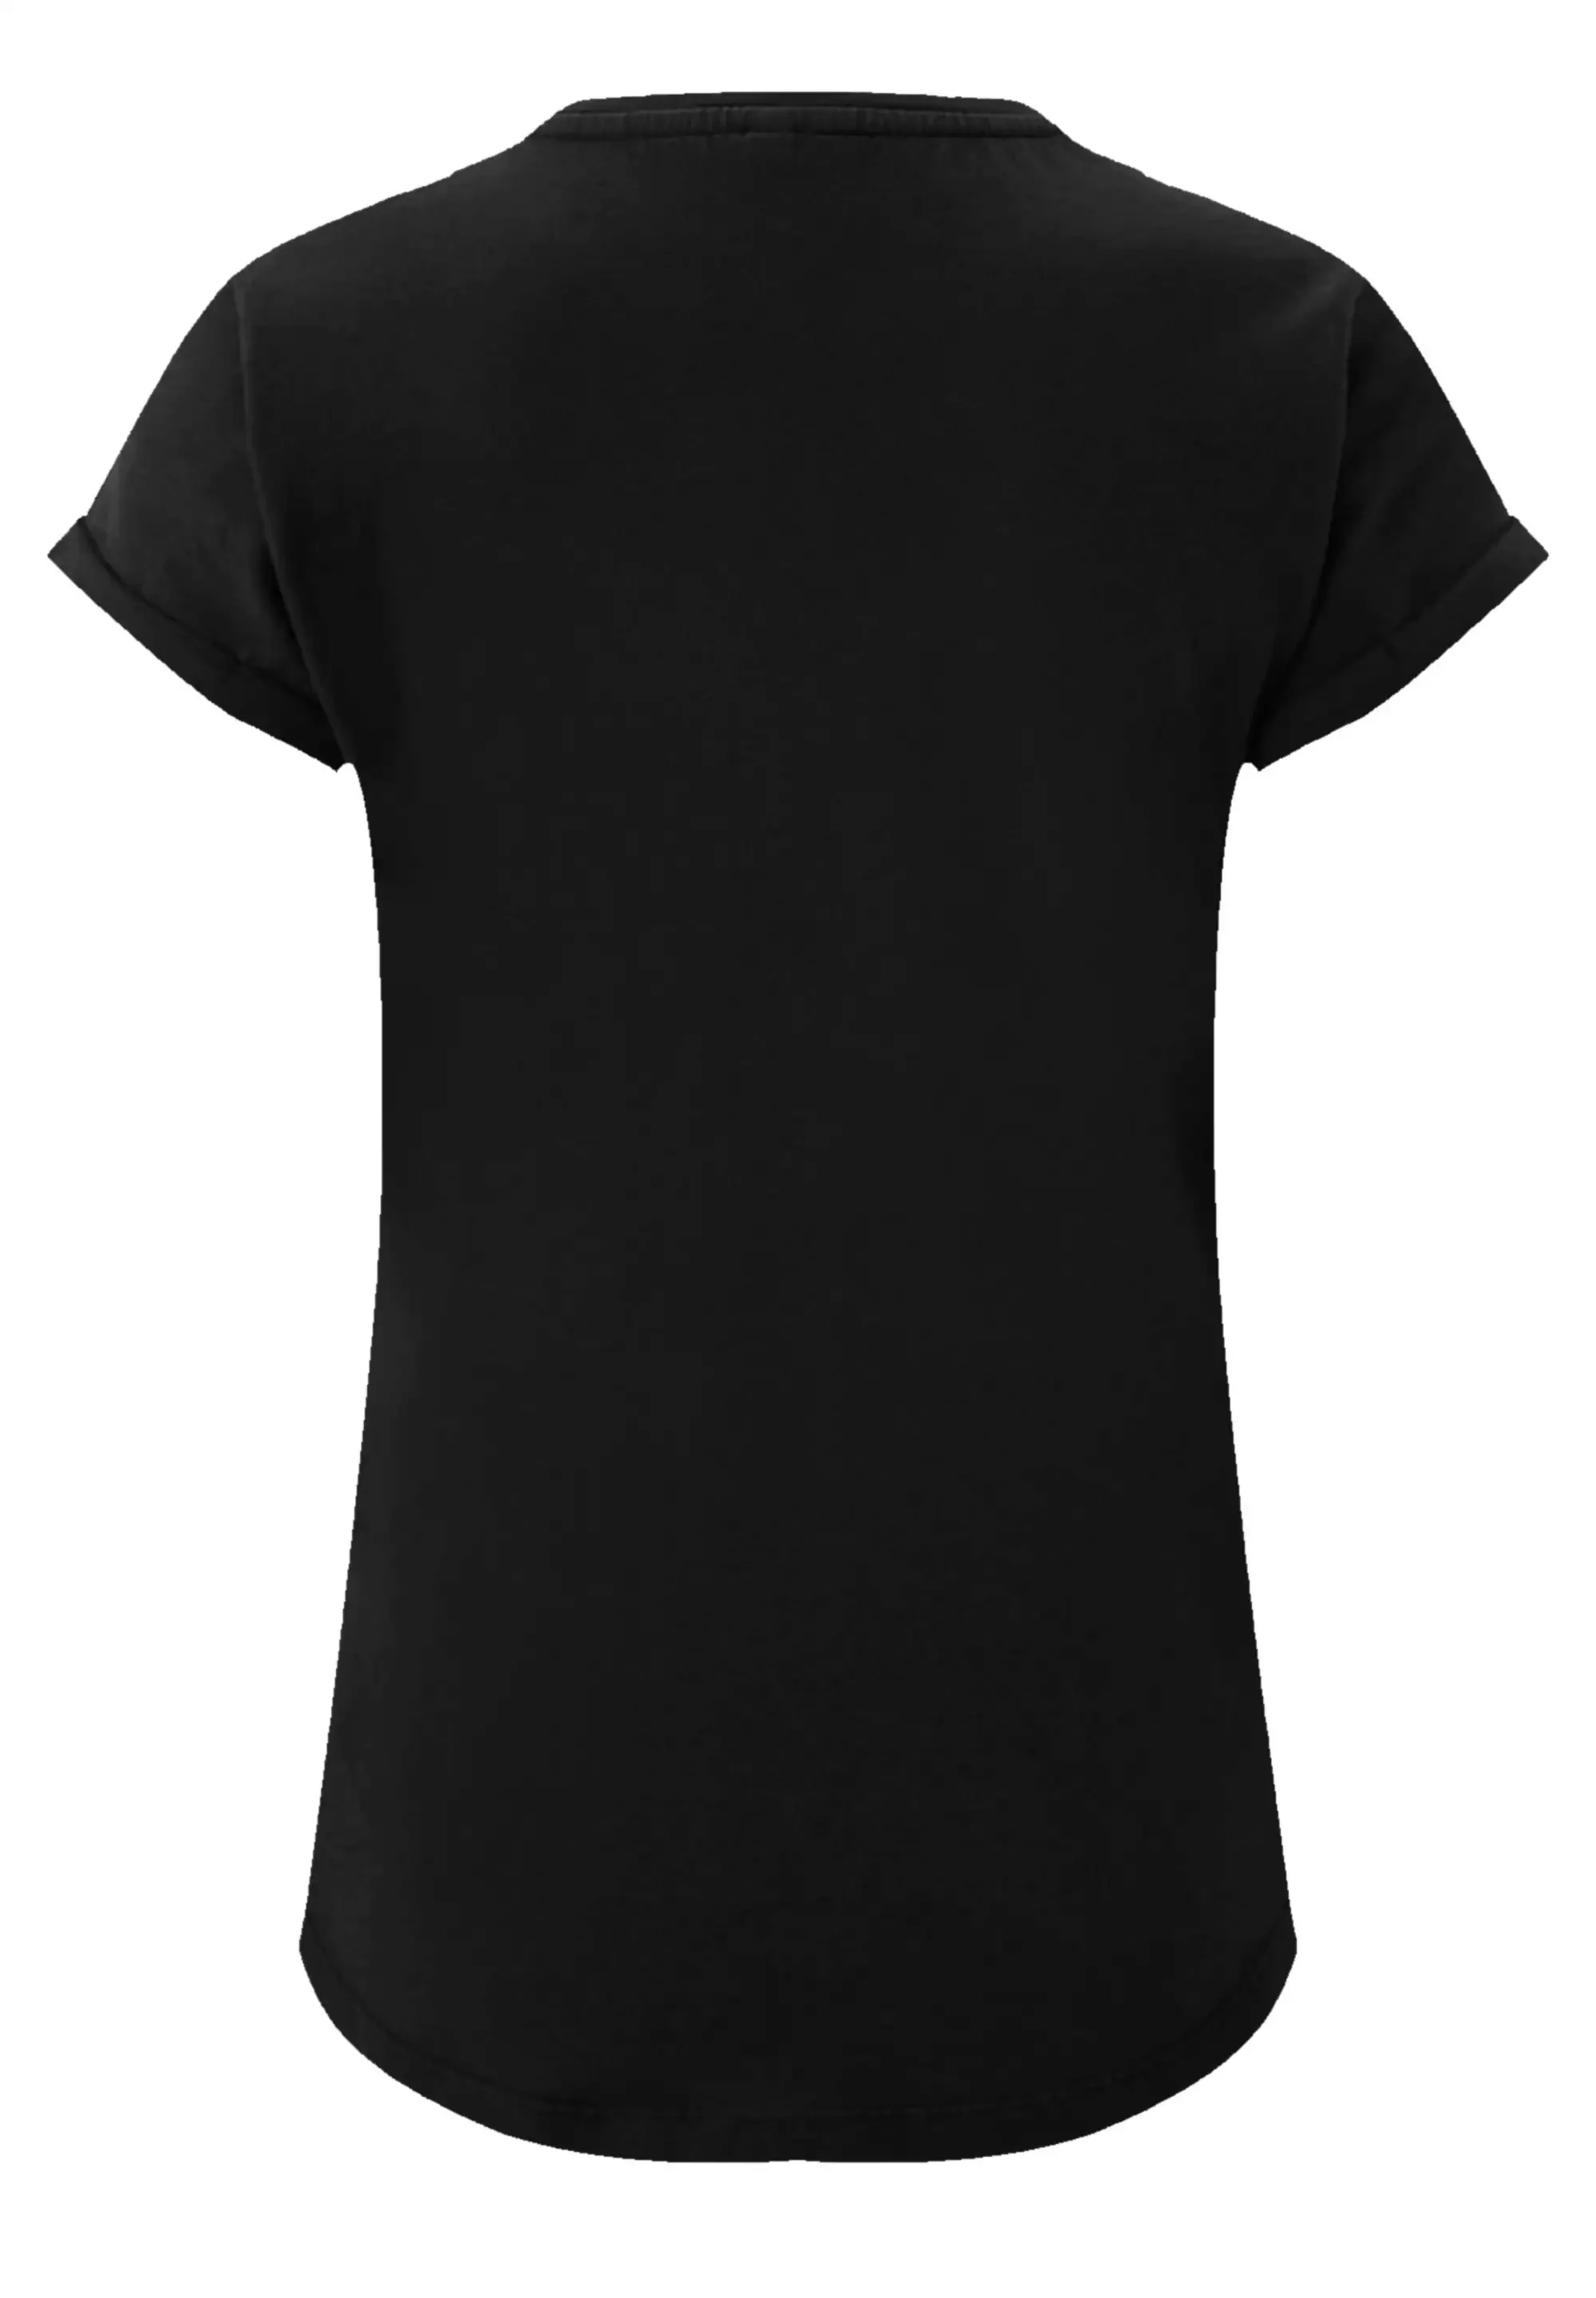 F4NT4STIC T-Shirt "Black Sabbath Wavy Logo", Print günstig online kaufen